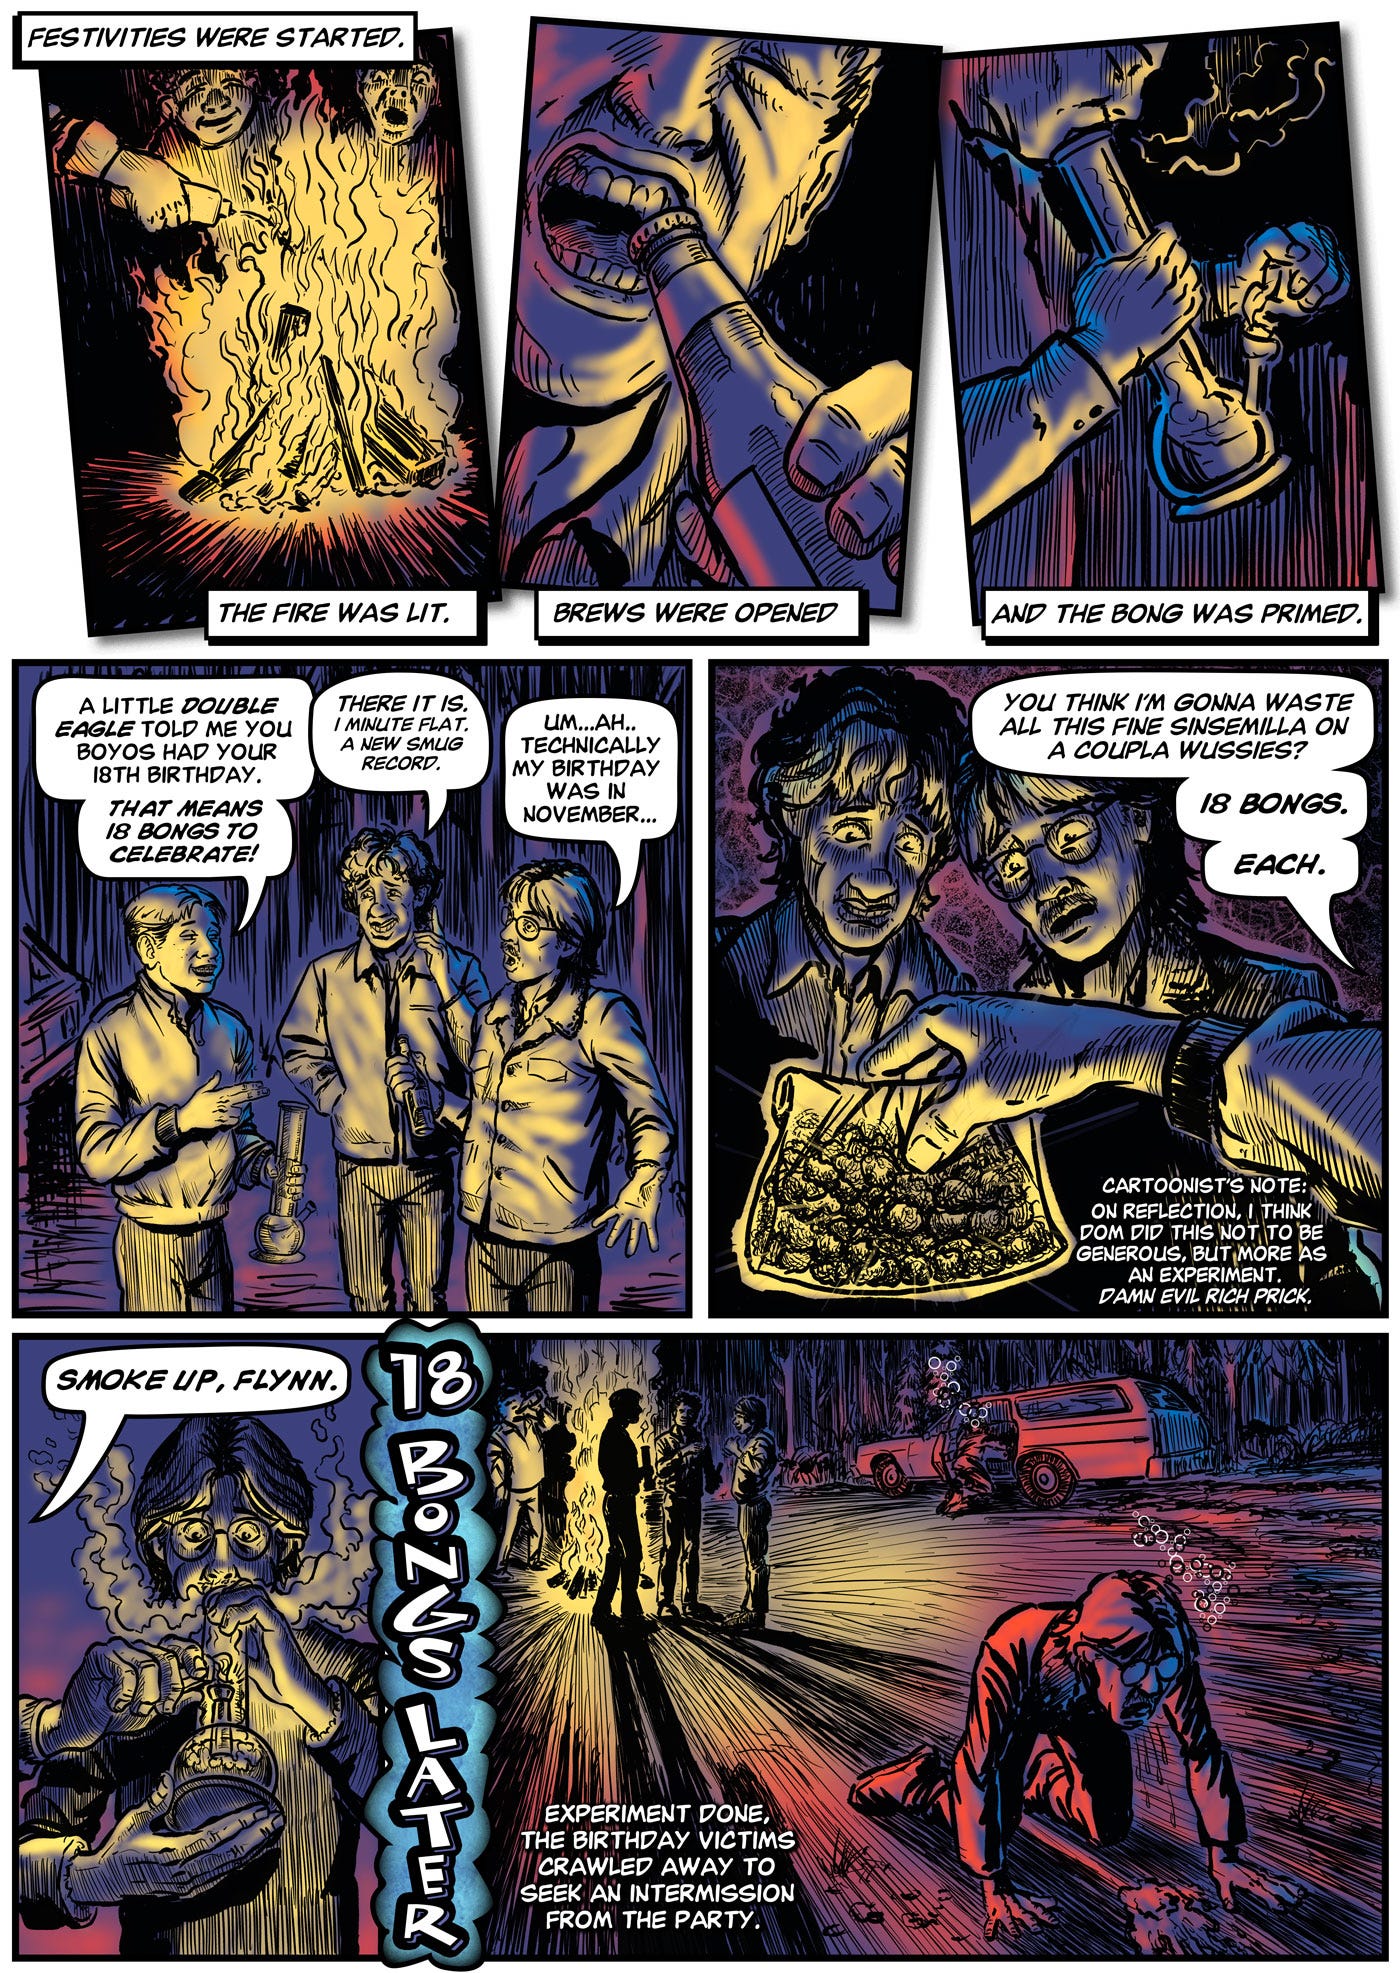 Warp 18 Page 2 Comic by ER Flynn